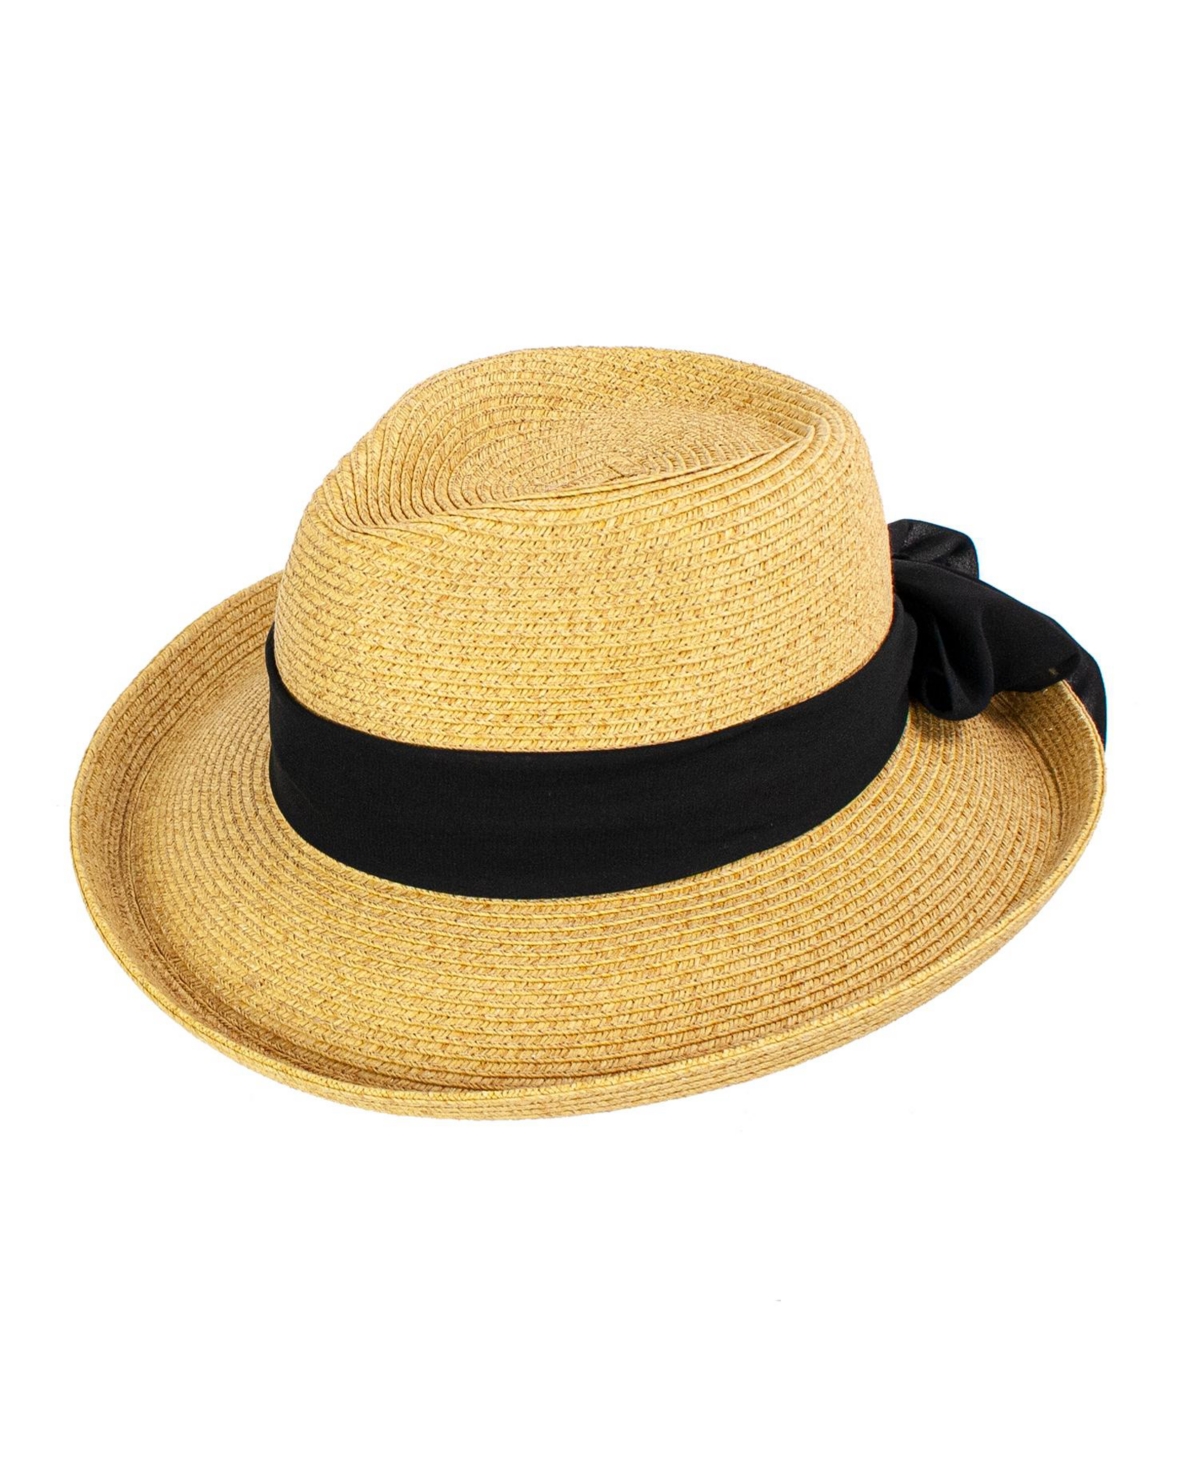 Olivia Packable Straw Sun Hat - Tan